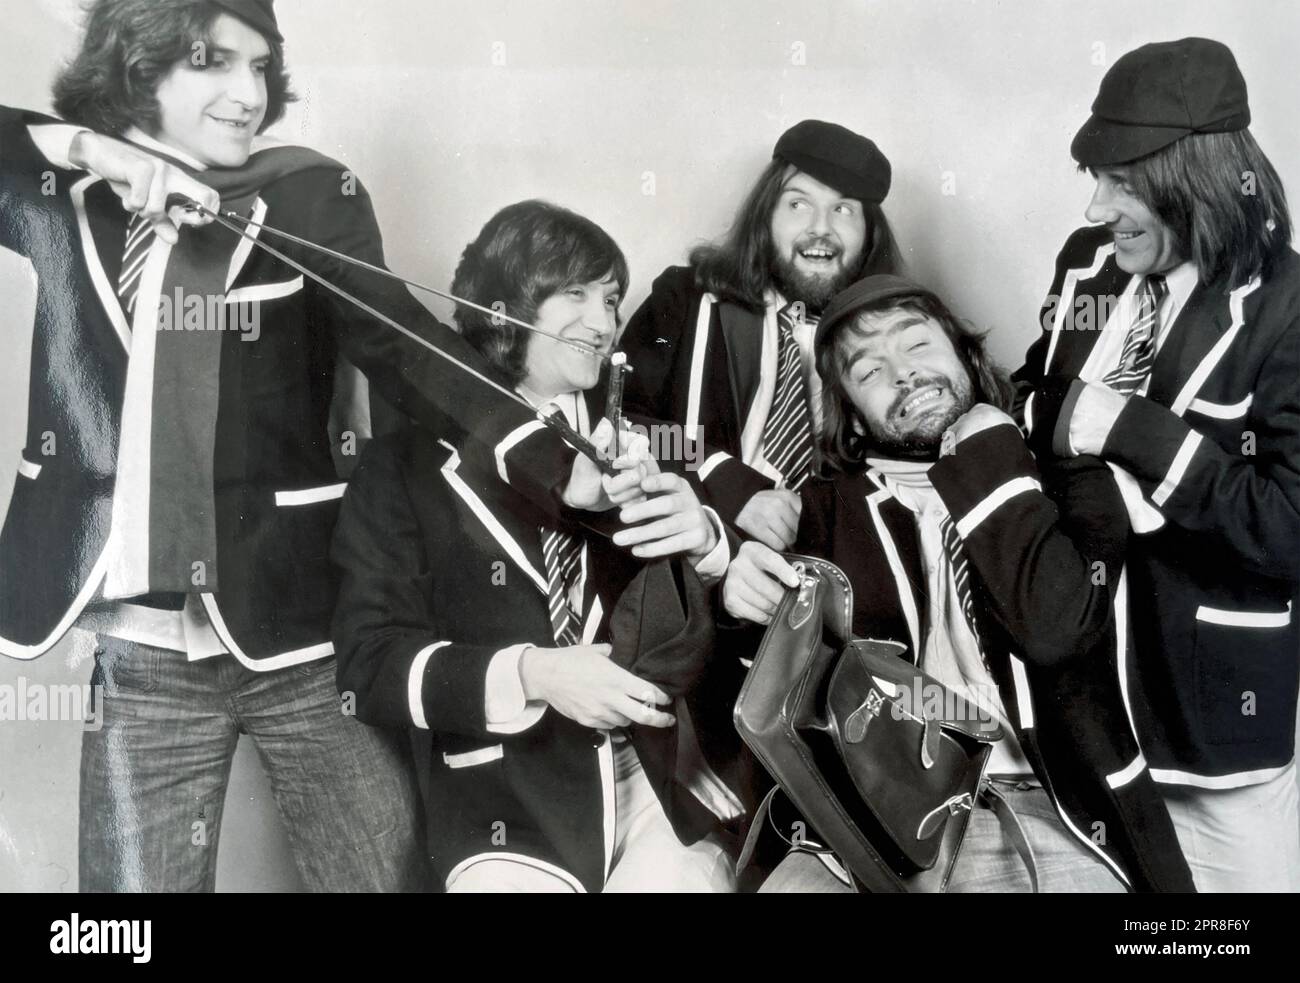 DIE KINKS UK Pop Group. Werbefoto über 1970. Von links: Ray Davies, Dave Davies, John Gosling, John Dalton, Mick Avory Stockfoto